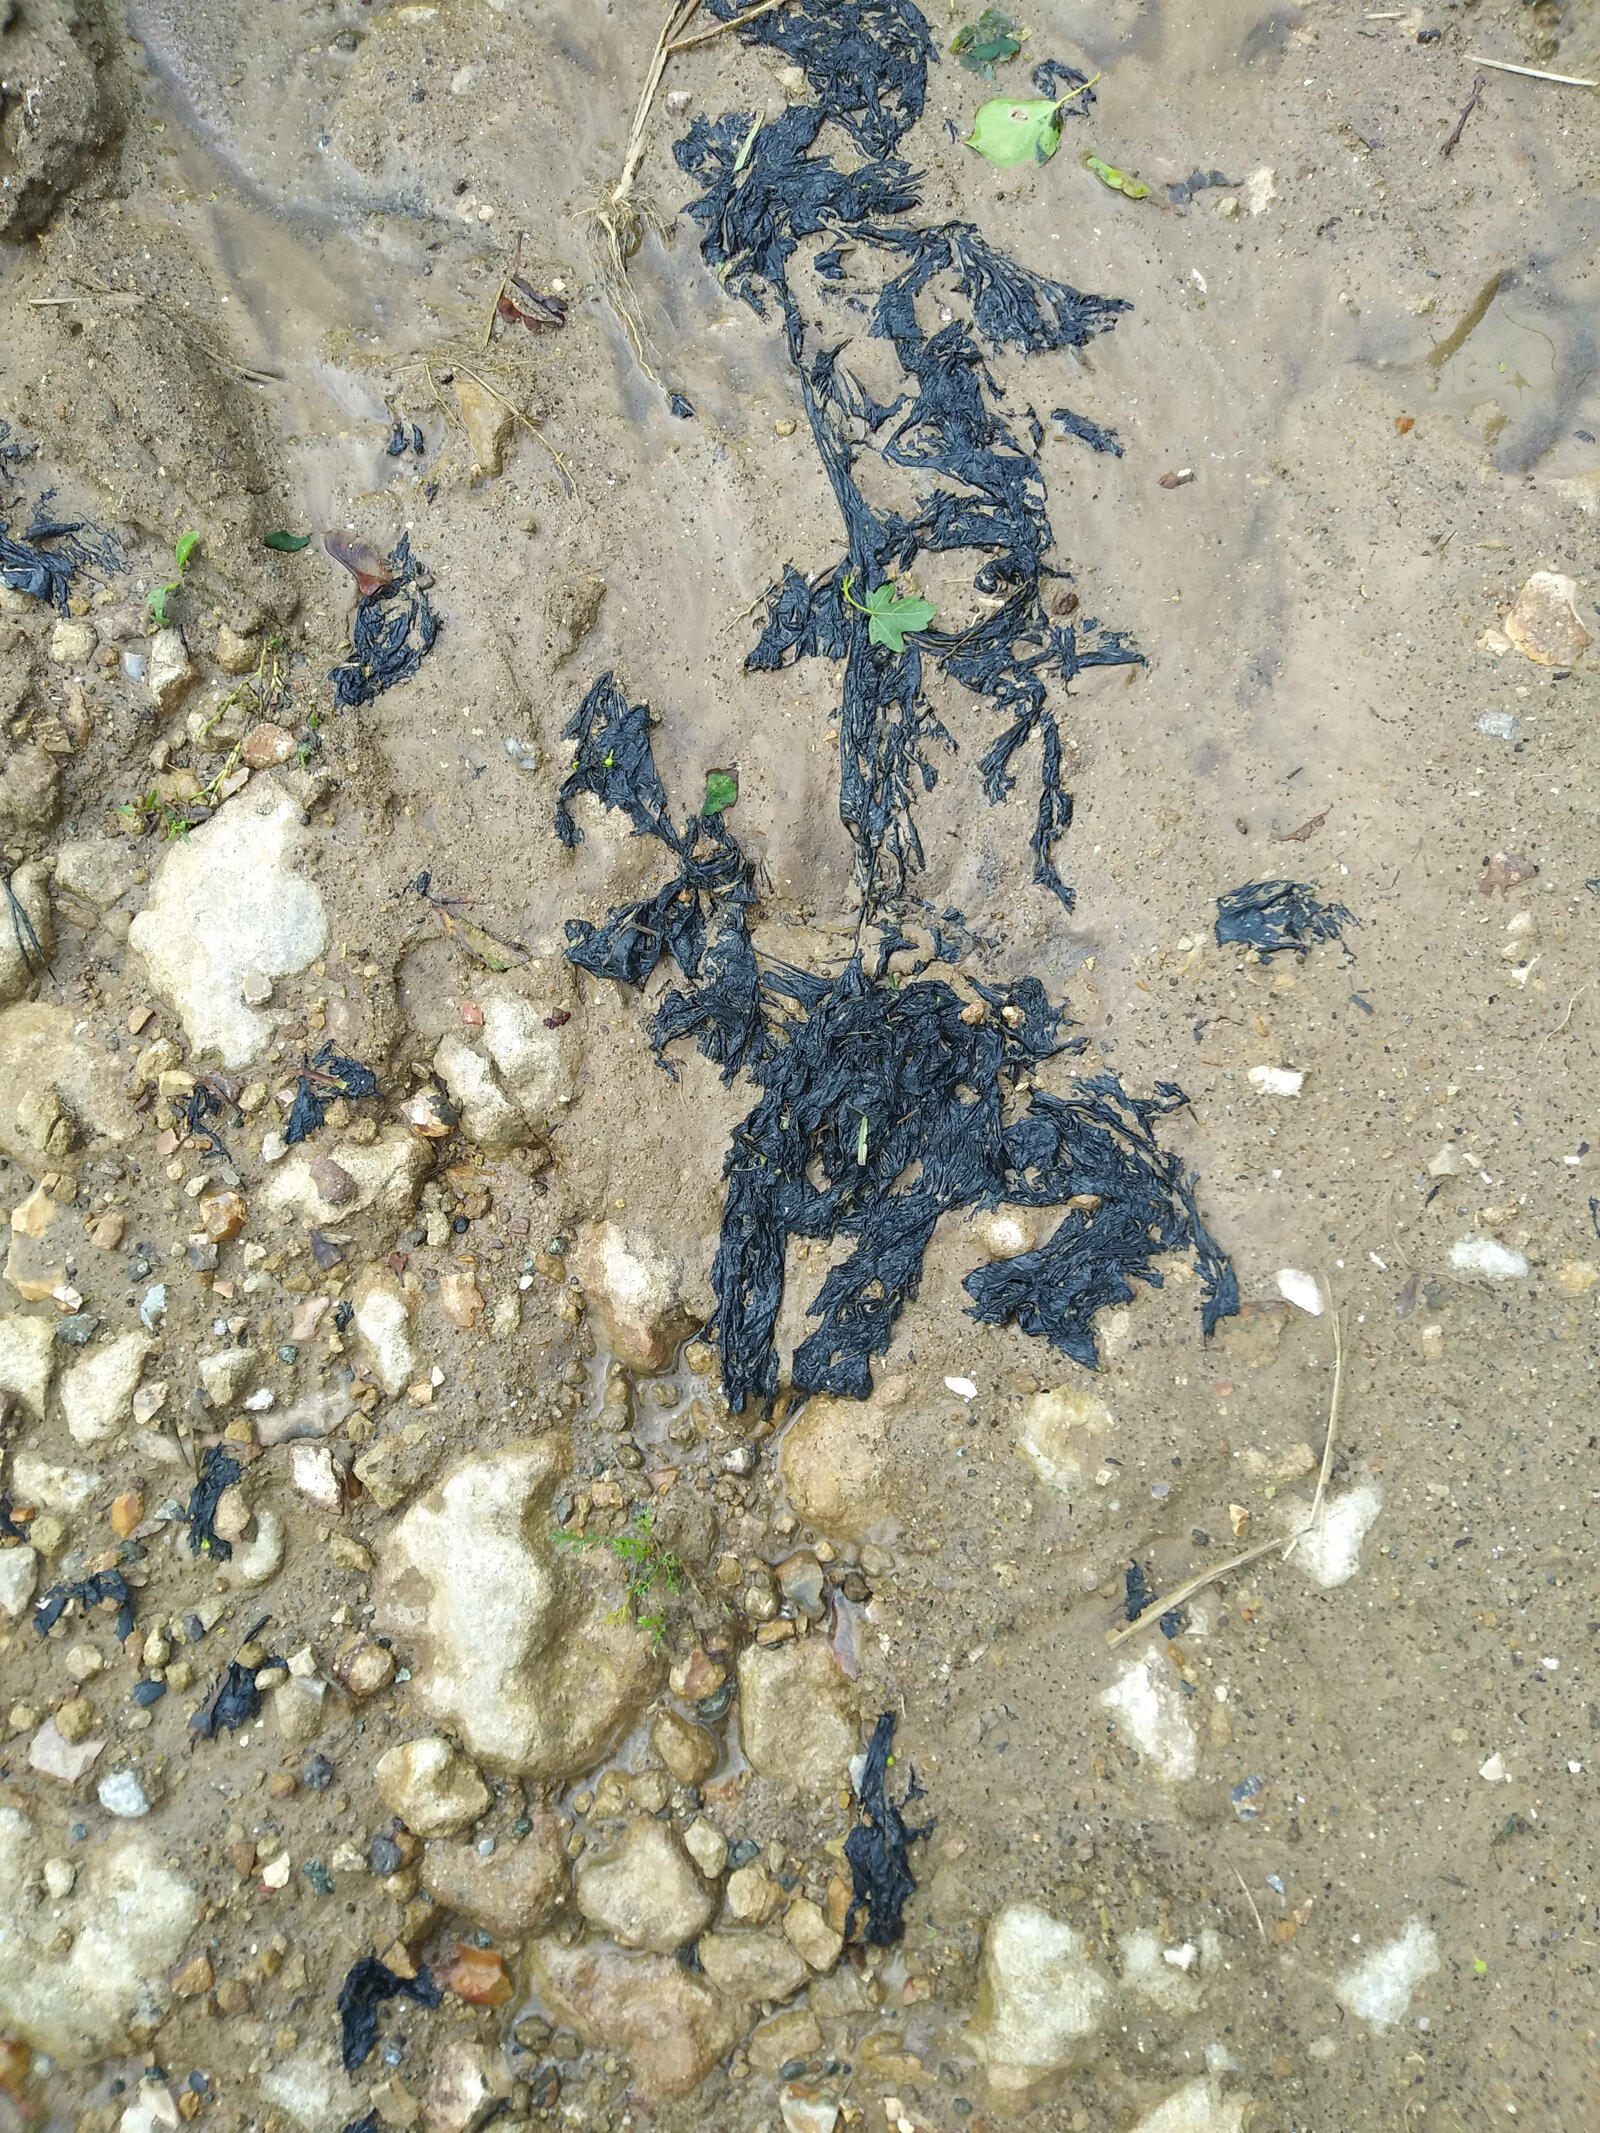 Agricultural Plastic Buried in Mud 2019.jpg